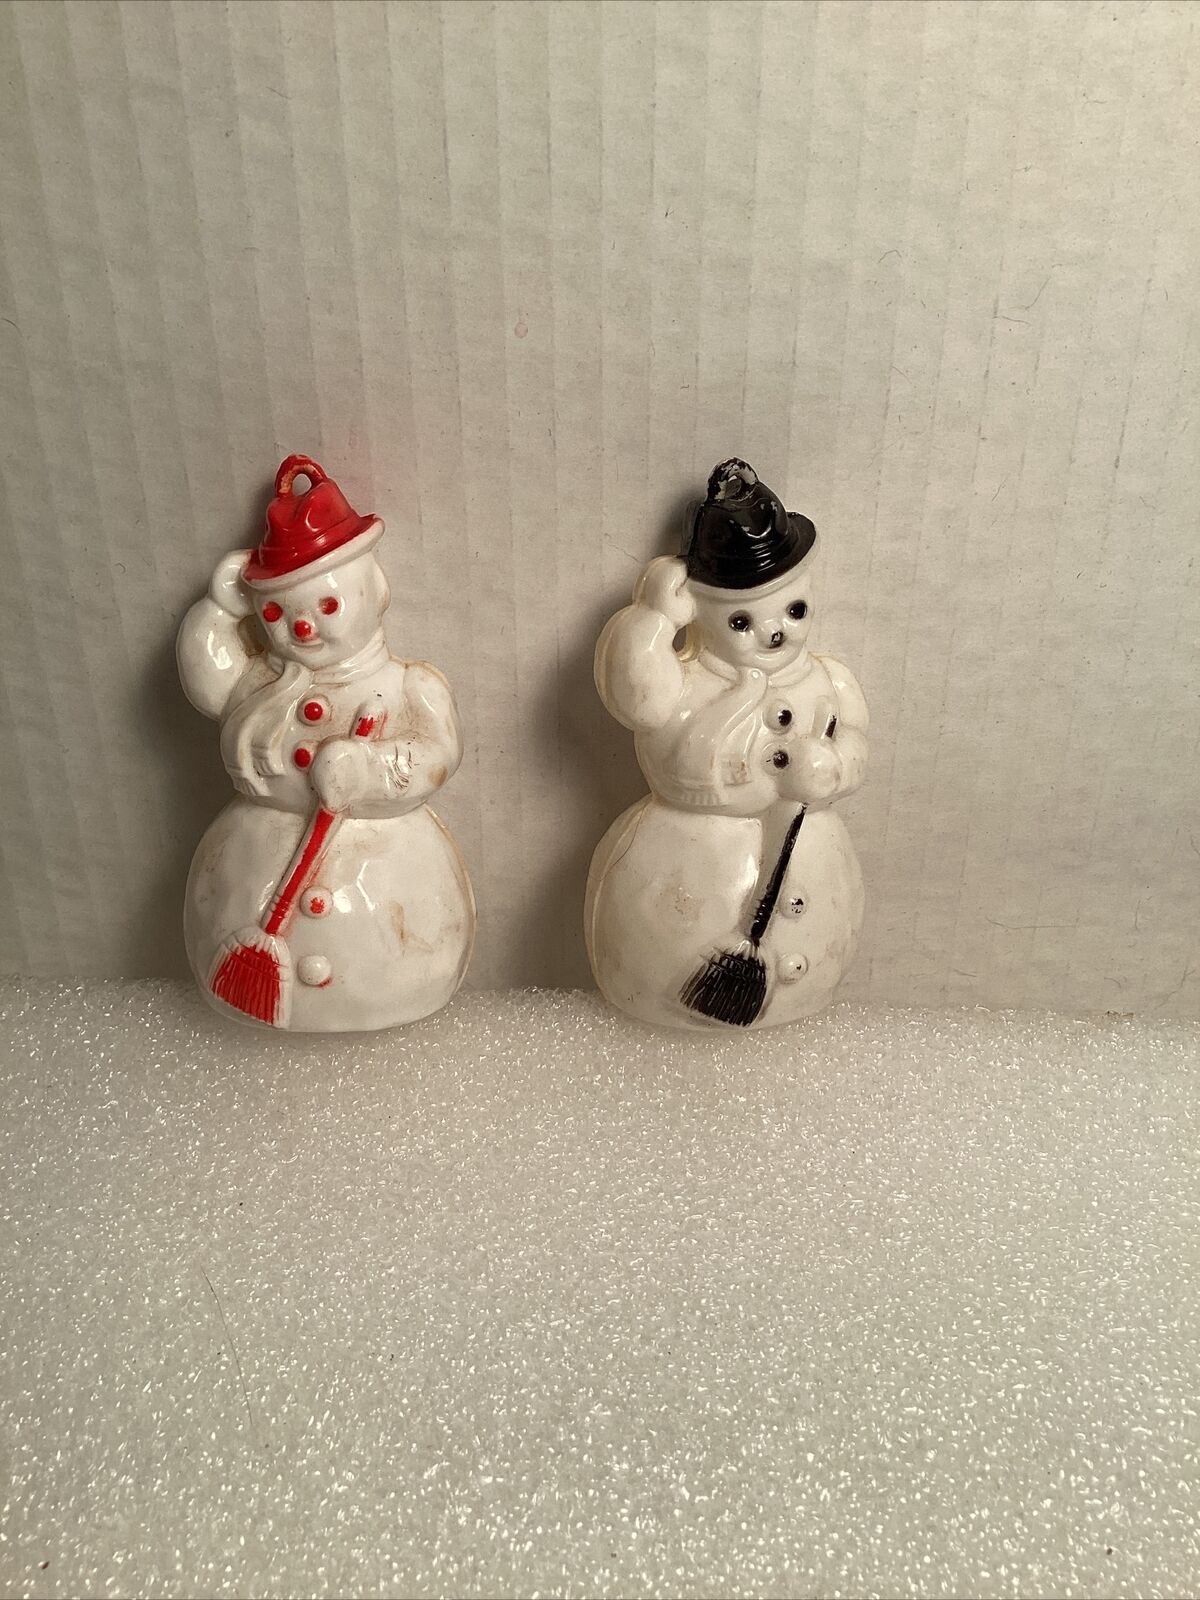 VTG Christmas Rosen Rosbro Celluloid Hard Plastic Snowman Ornament Red & Black